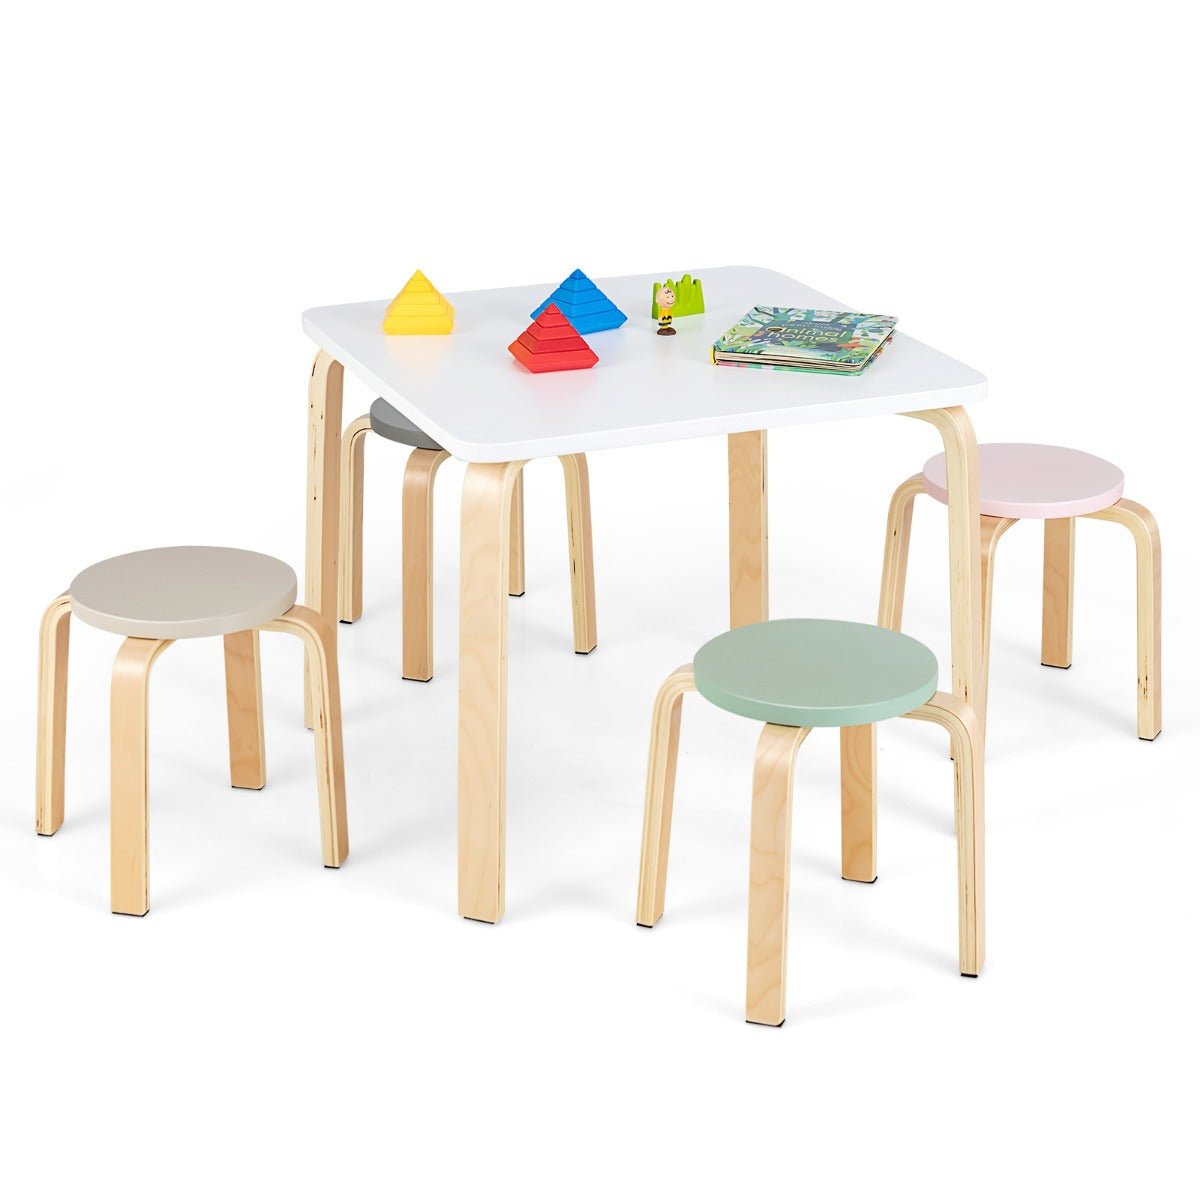 Macaroon Kids Table & Chair Set: 5-Piece Furniture Ensemble for Kids Room